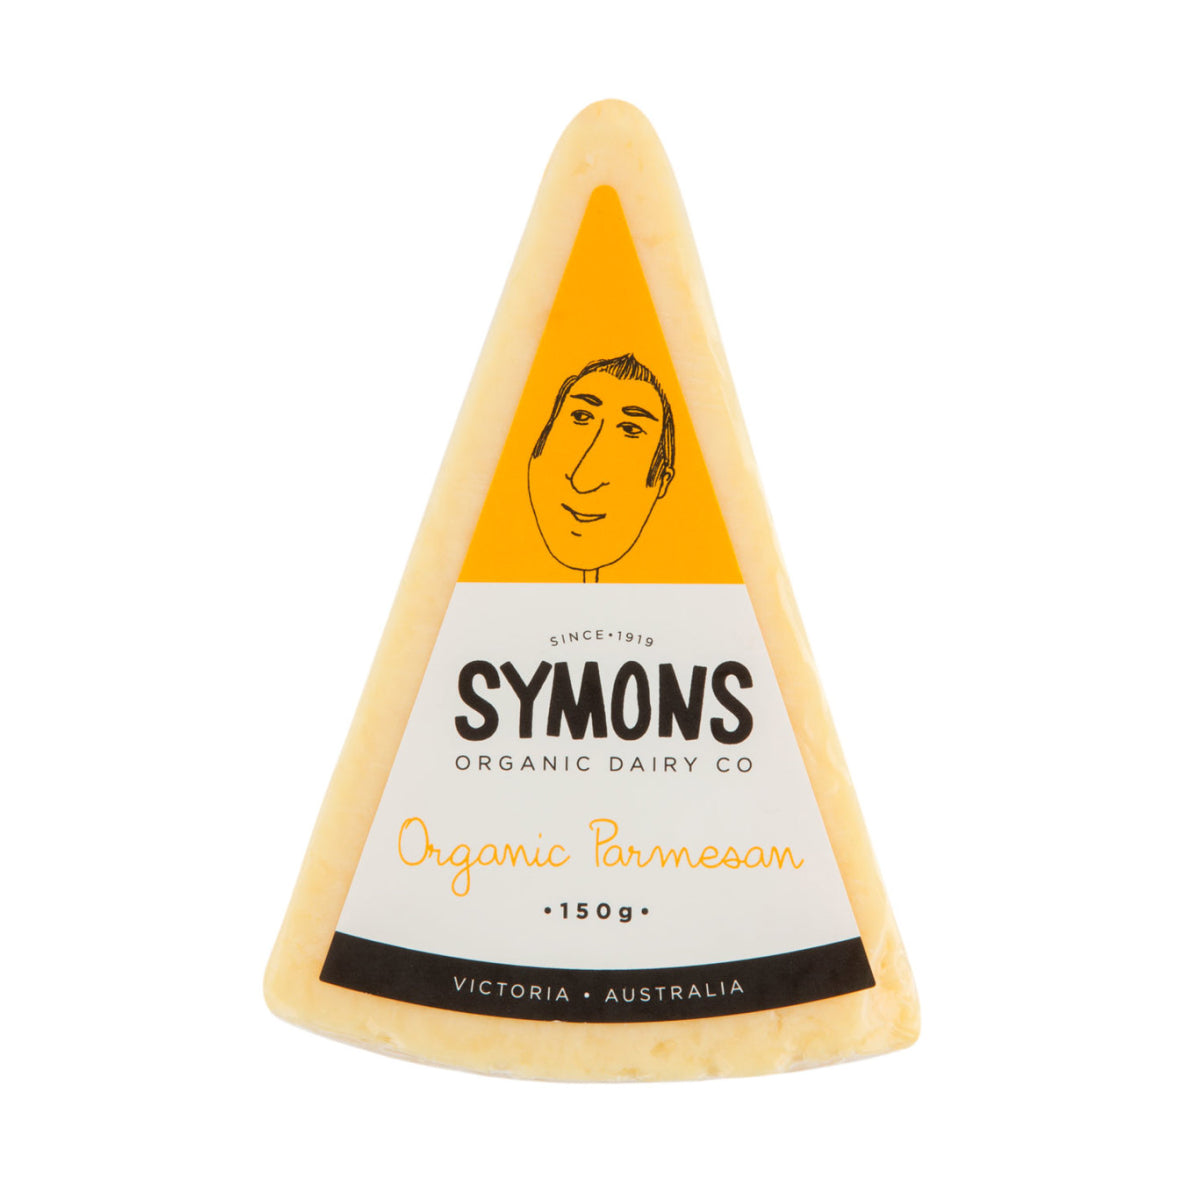 Symons Organic Parmesan 150g